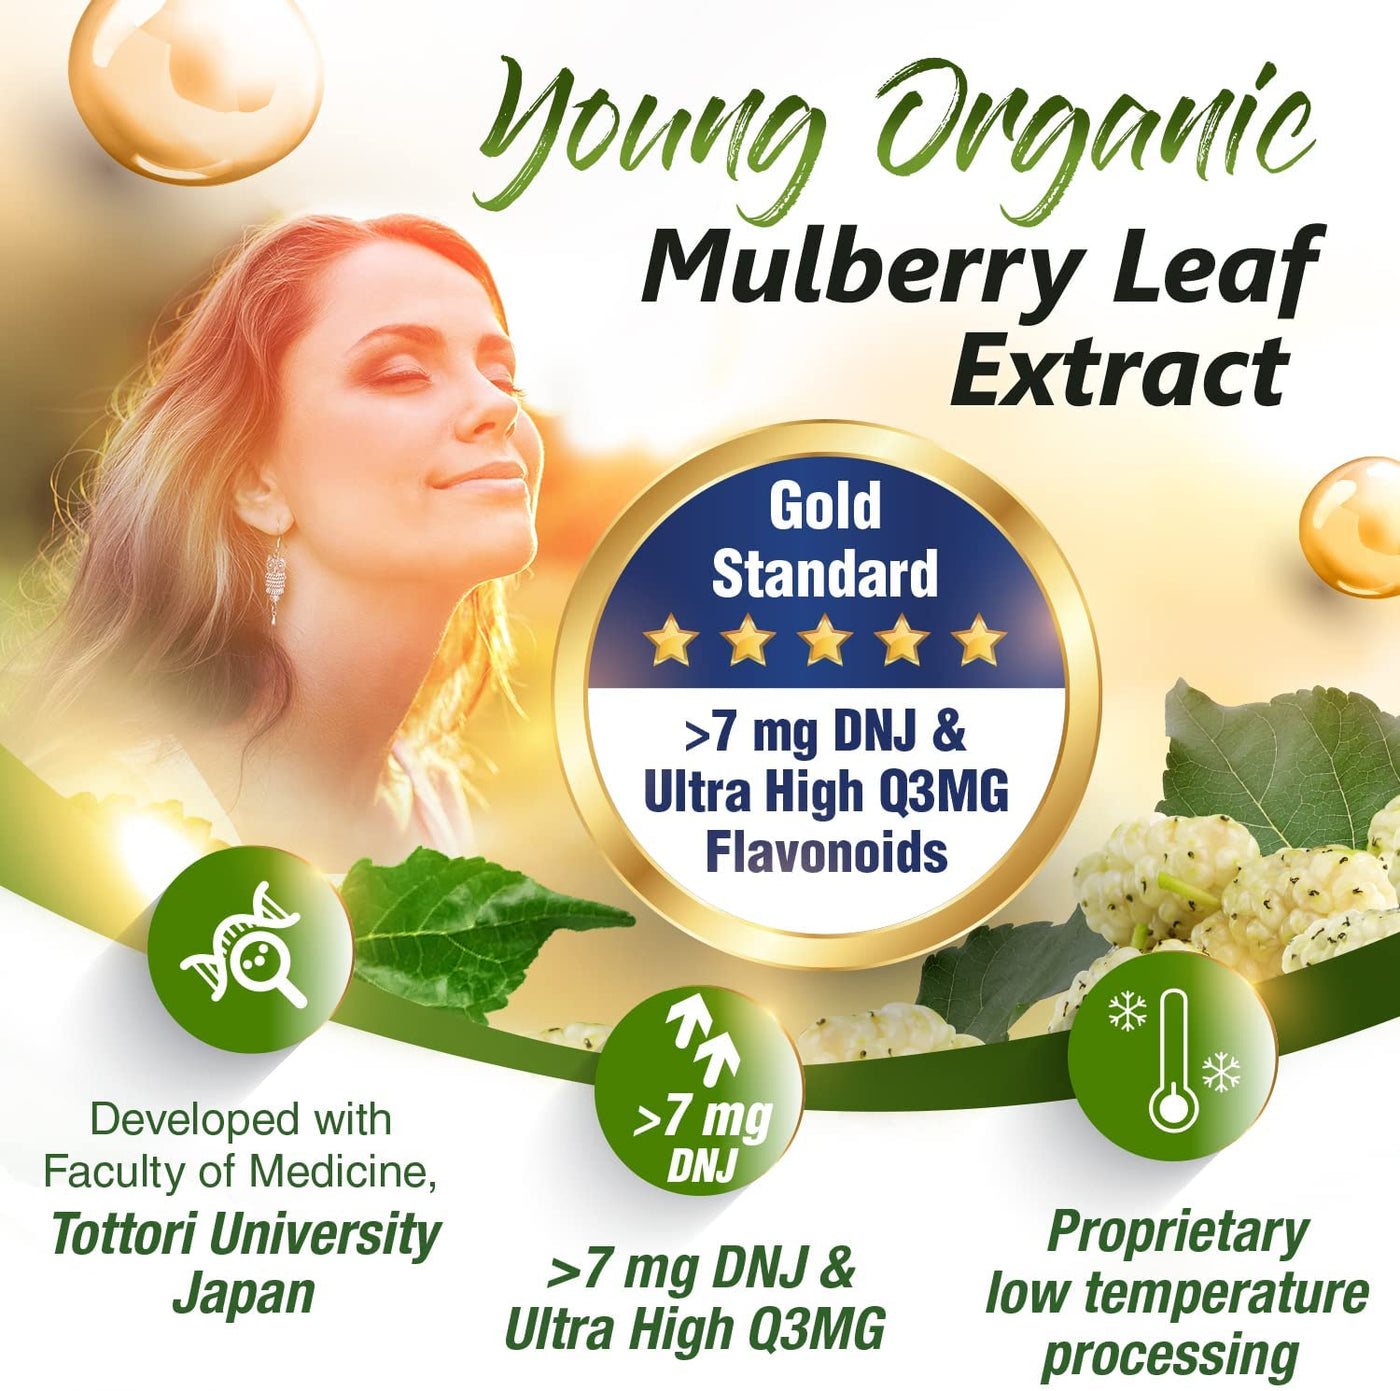 LABO Nutrition Mulbiotic, Organic Mulberry Leaf Extract + LactoSpore Probiotic & Fenumannan Prebiotic, for Blood Sugar Control, Sugar & Carb Cravings - Lifestream Group US